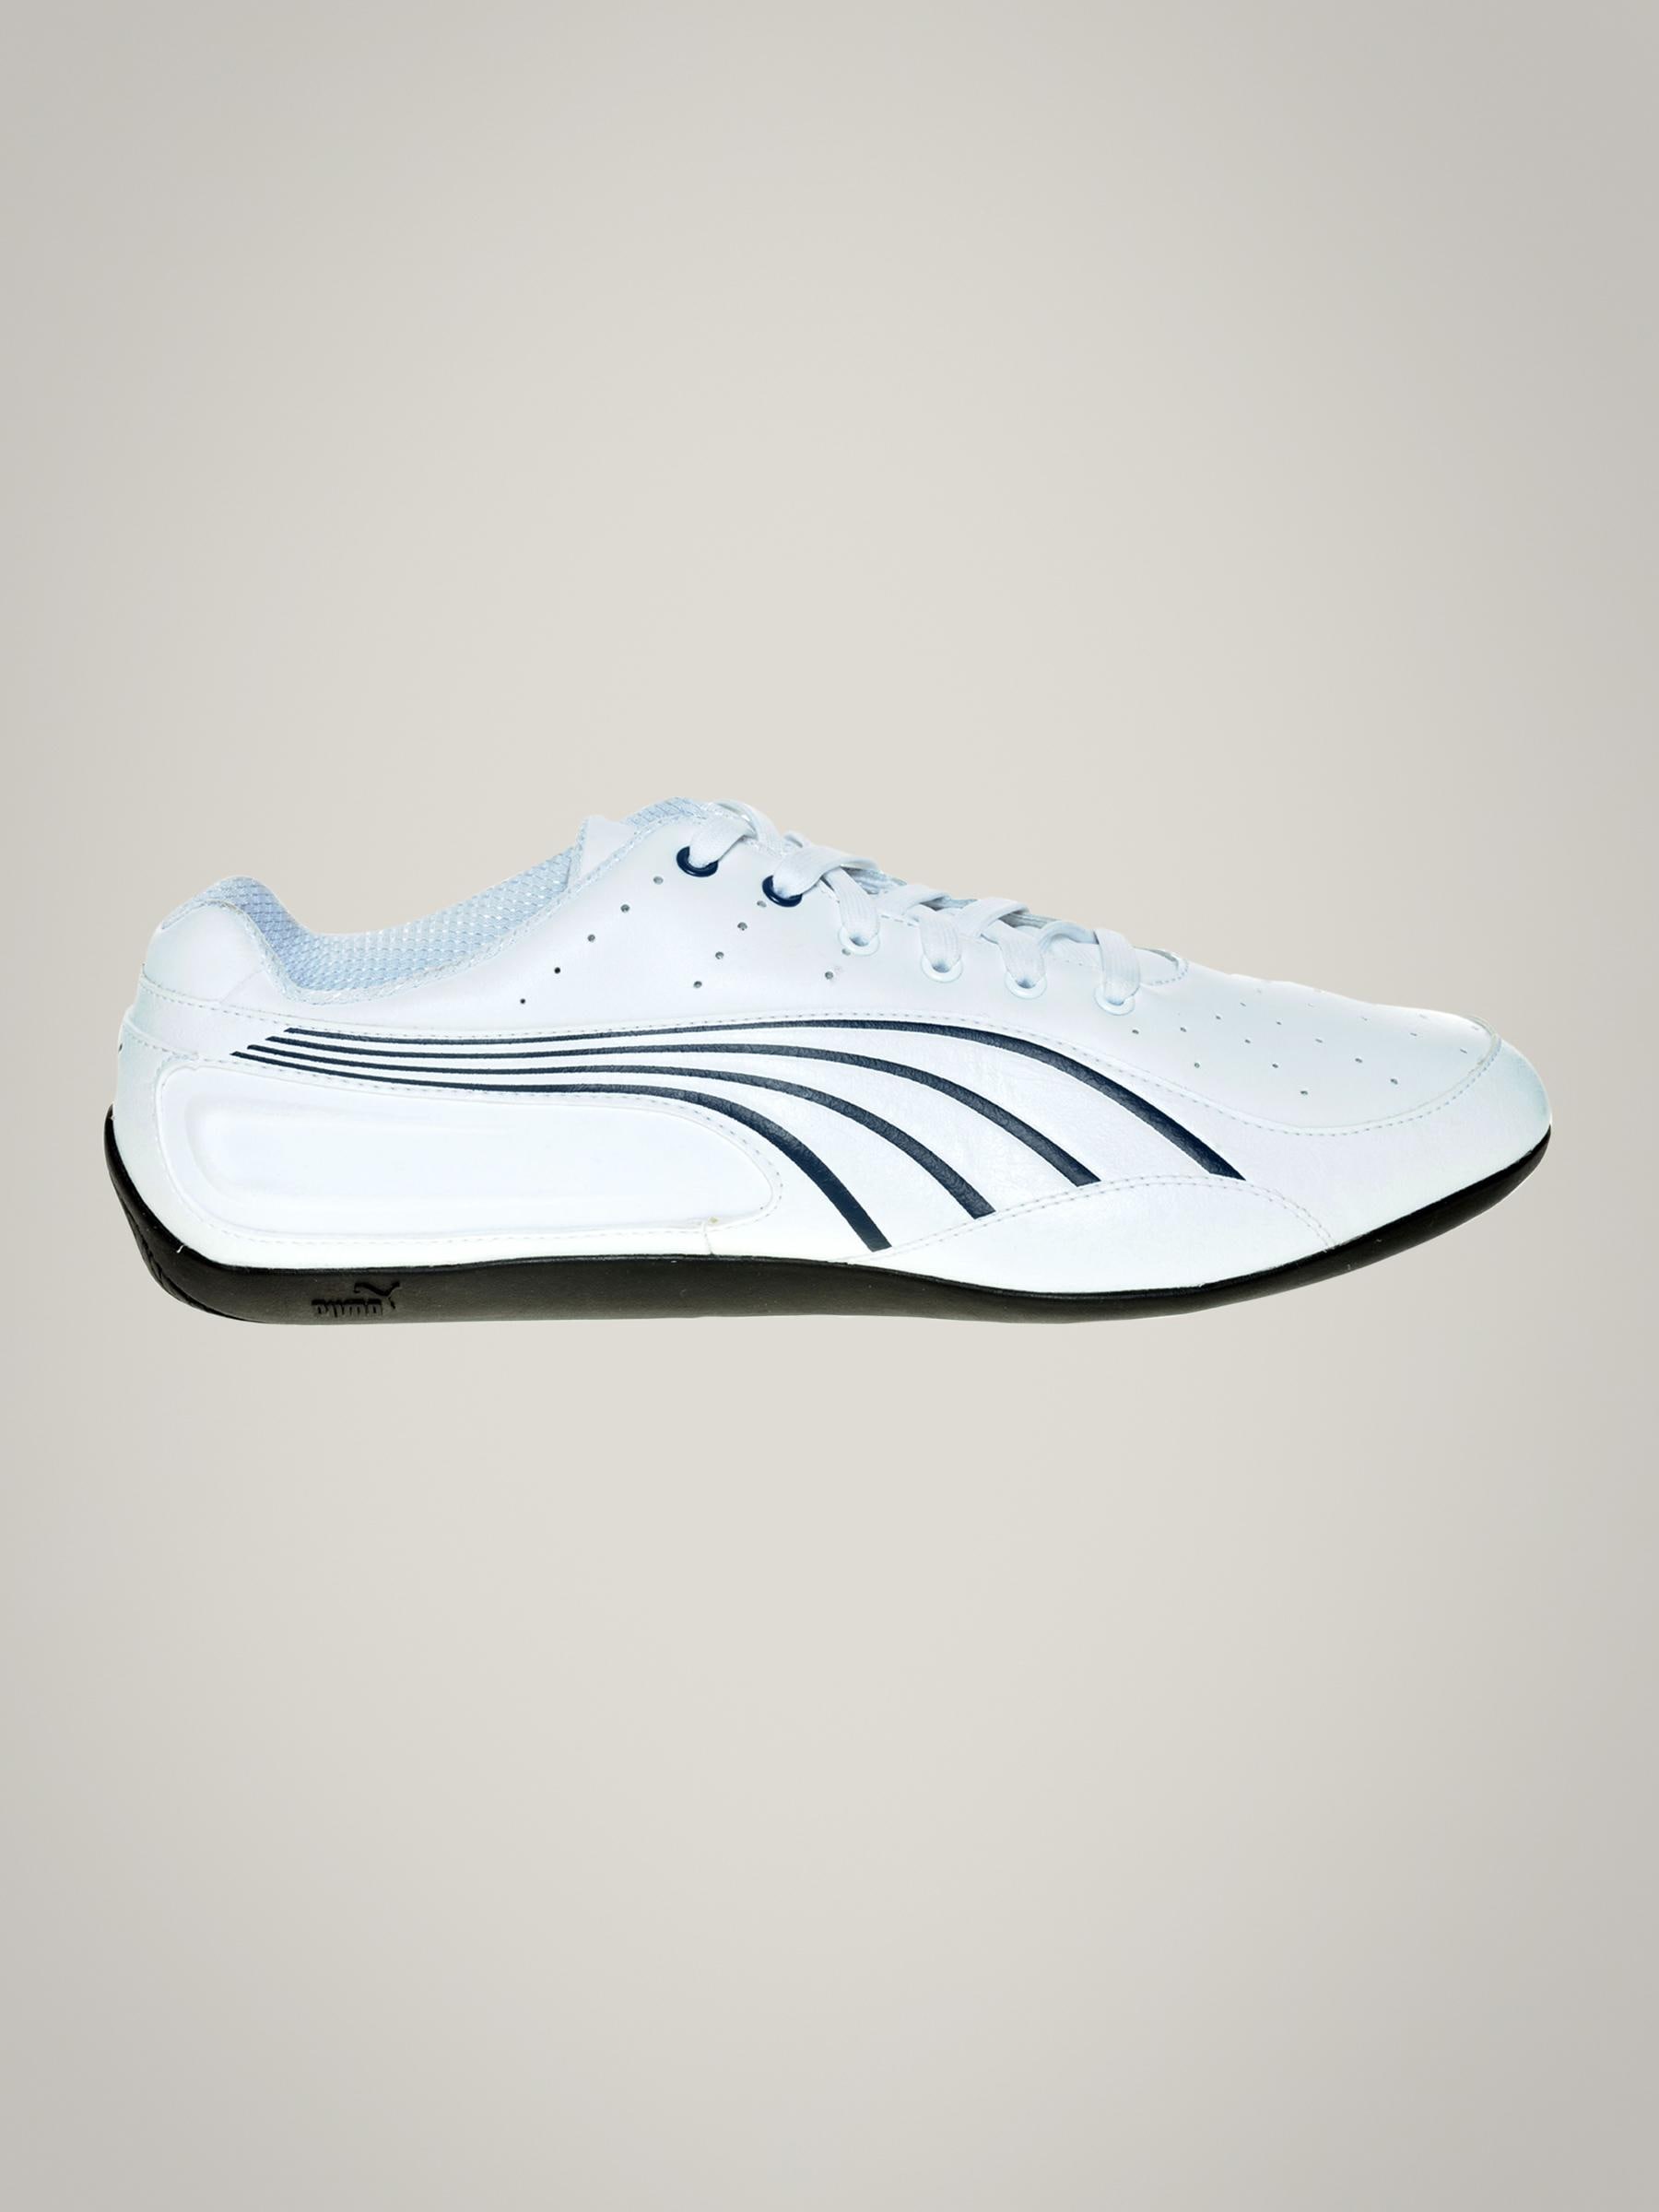 Puma Men's Furore White Shoe